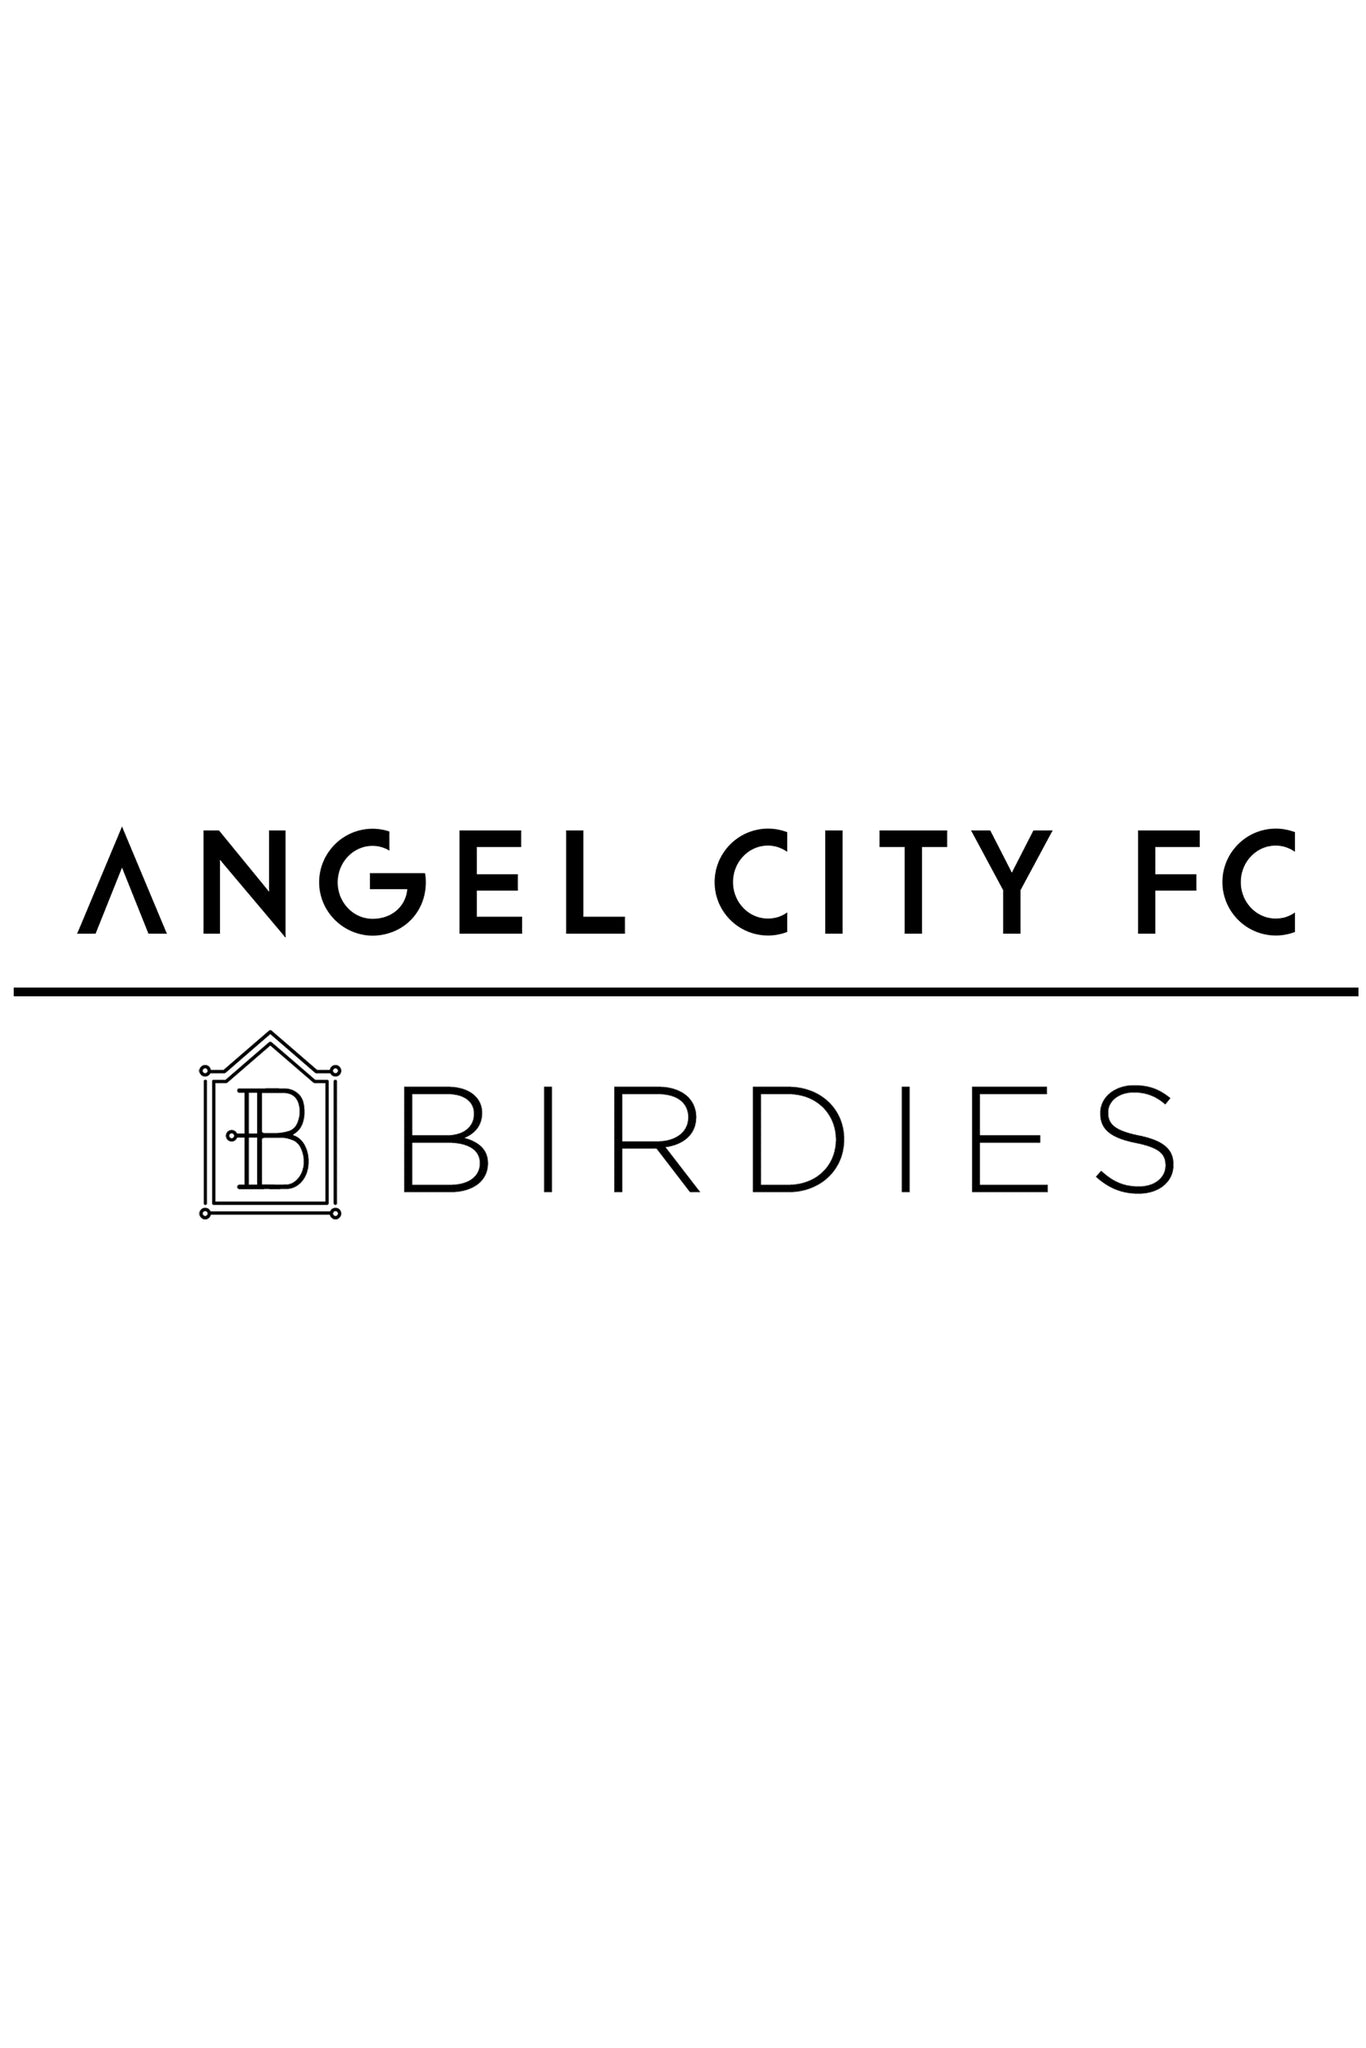 Birdies x Angel City FC: Founding Sleeve Sponsor